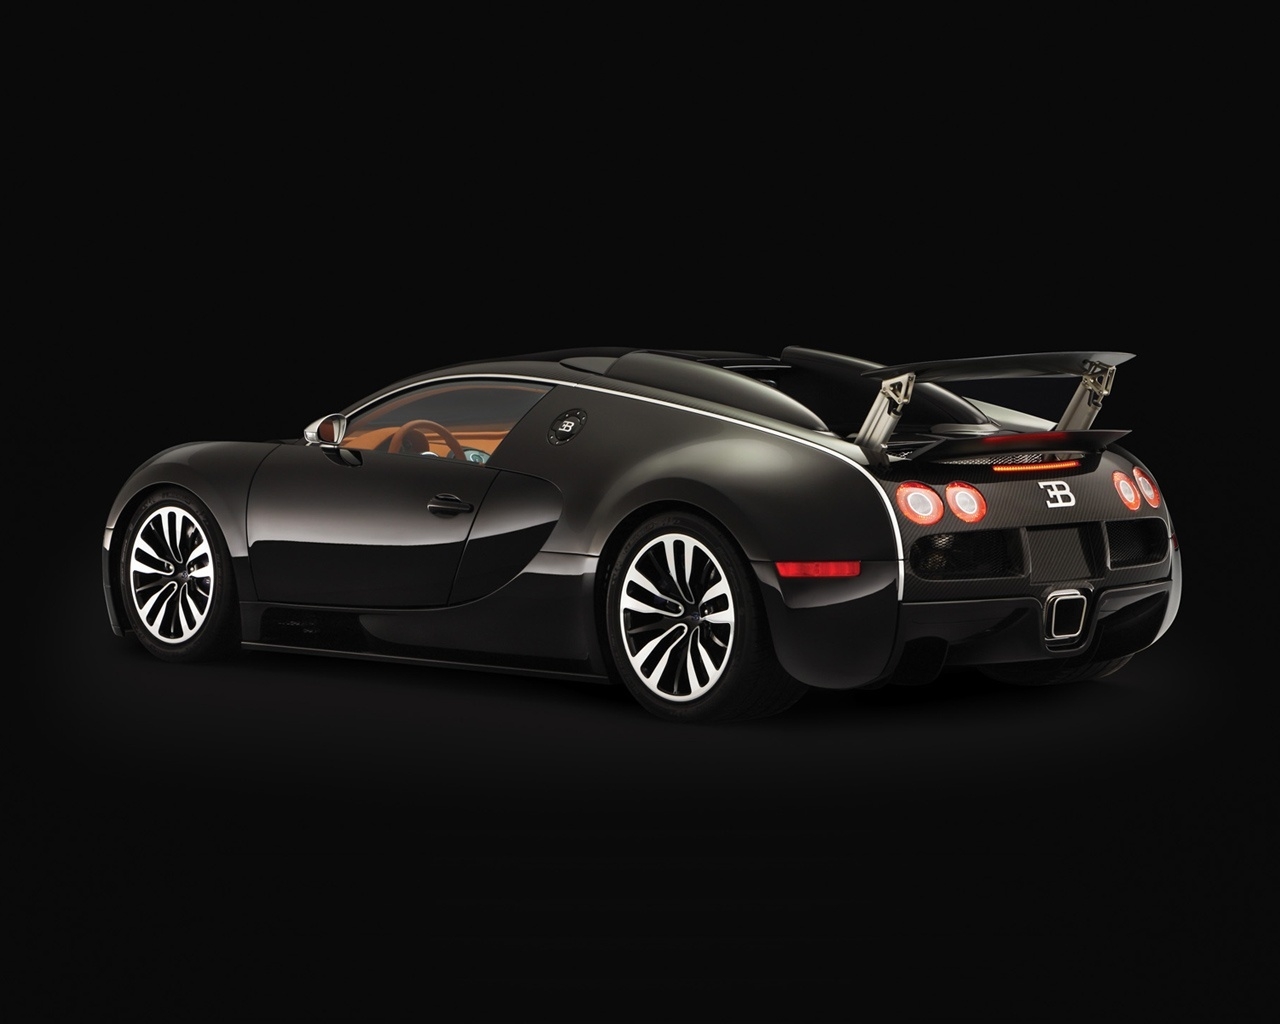 Bugatti Veyron Sang Noir 2008 - Rear Angle for 1280 x 1024 resolution